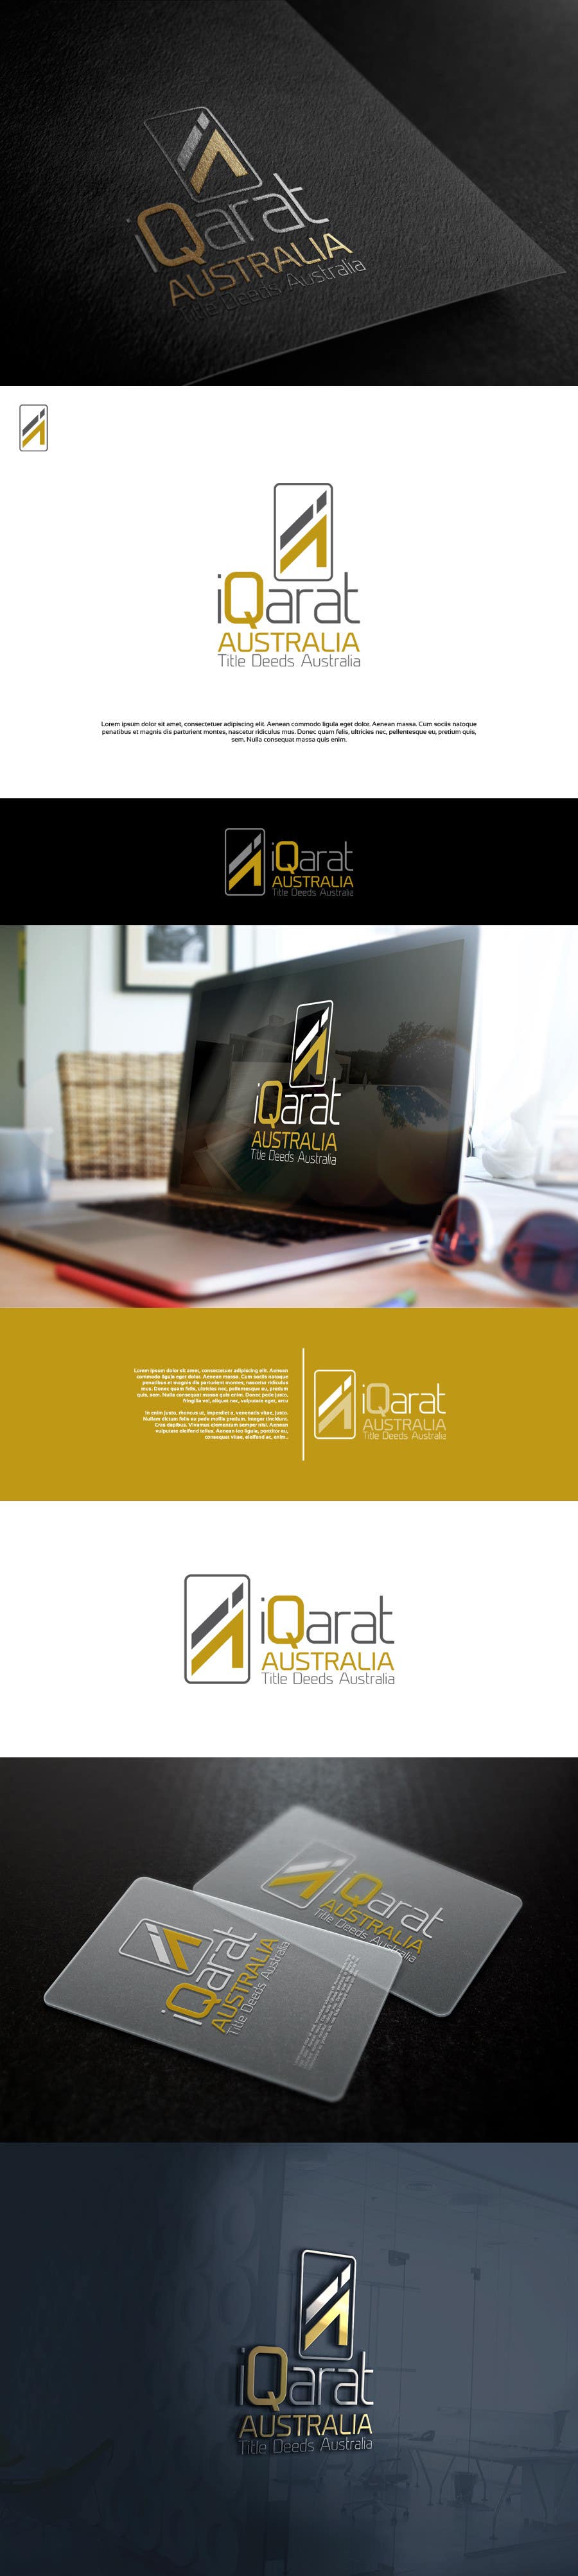 Contest Entry #47 for                                                 Design a Logo for an premium facilitator ‘Off-Market’ property concierge business - iQarat Australia
                                            